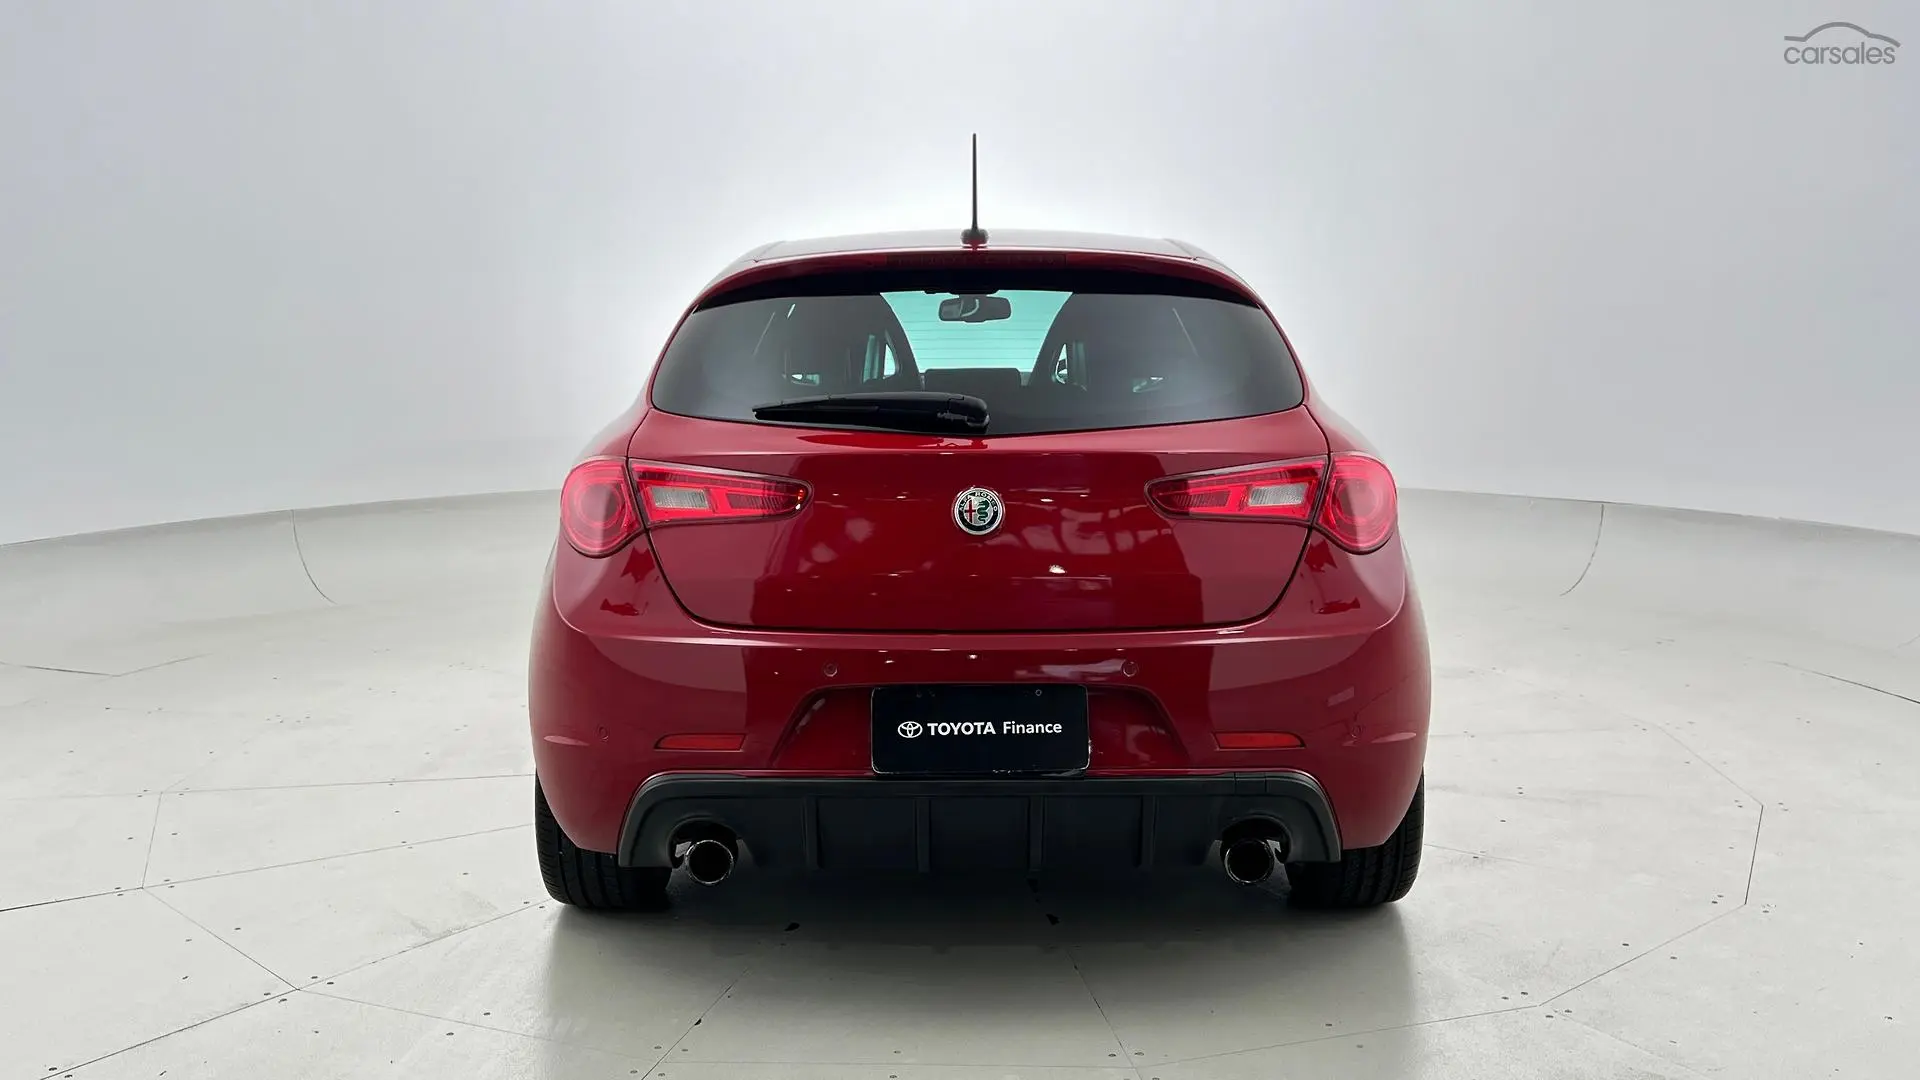 2018 Alfa Romeo Giulietta Image 10